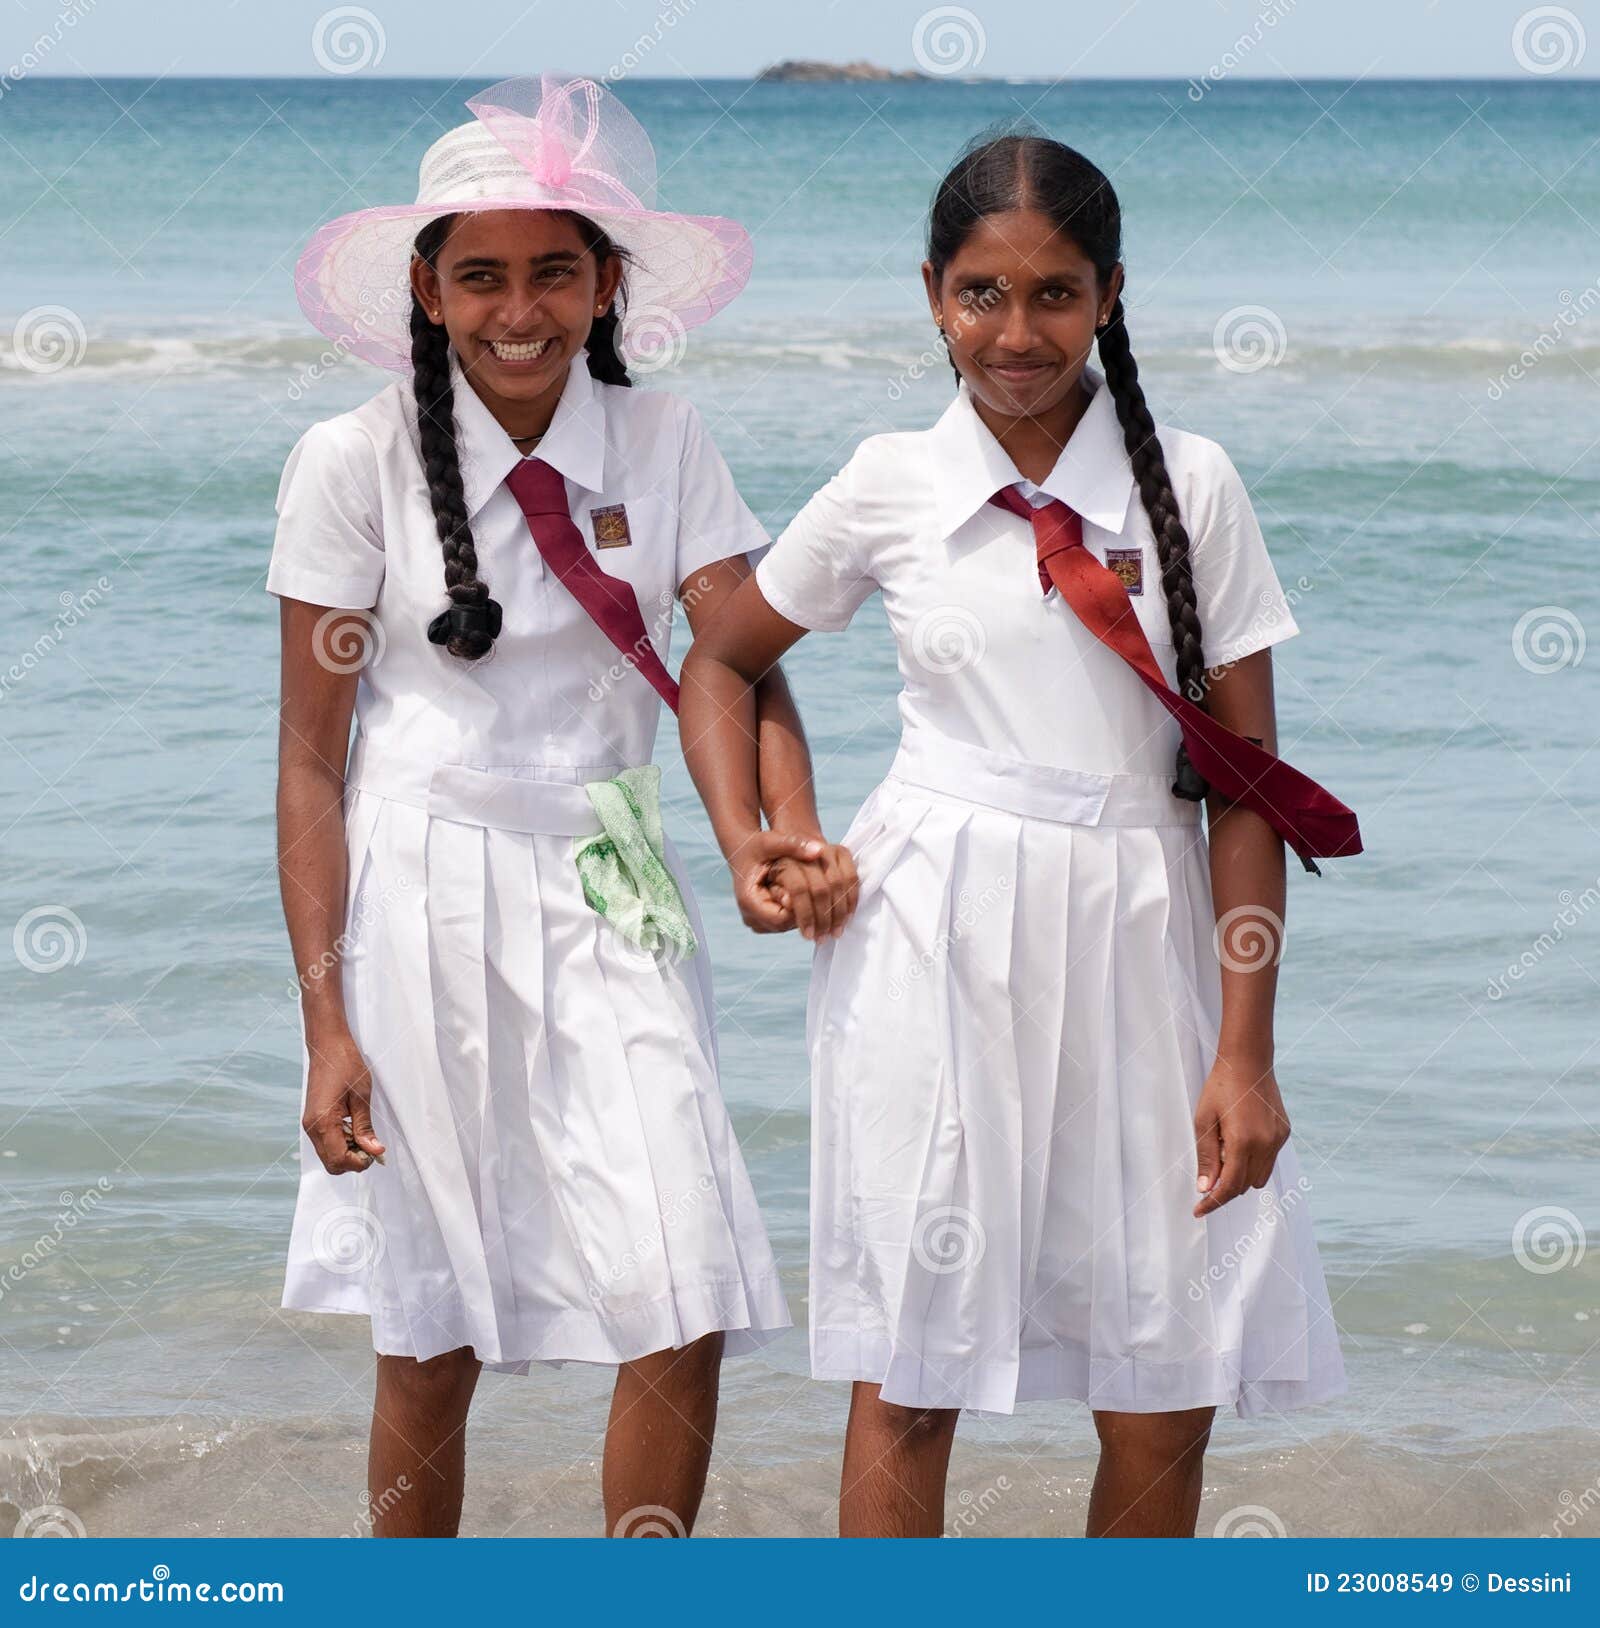 Sri lankan school girls only